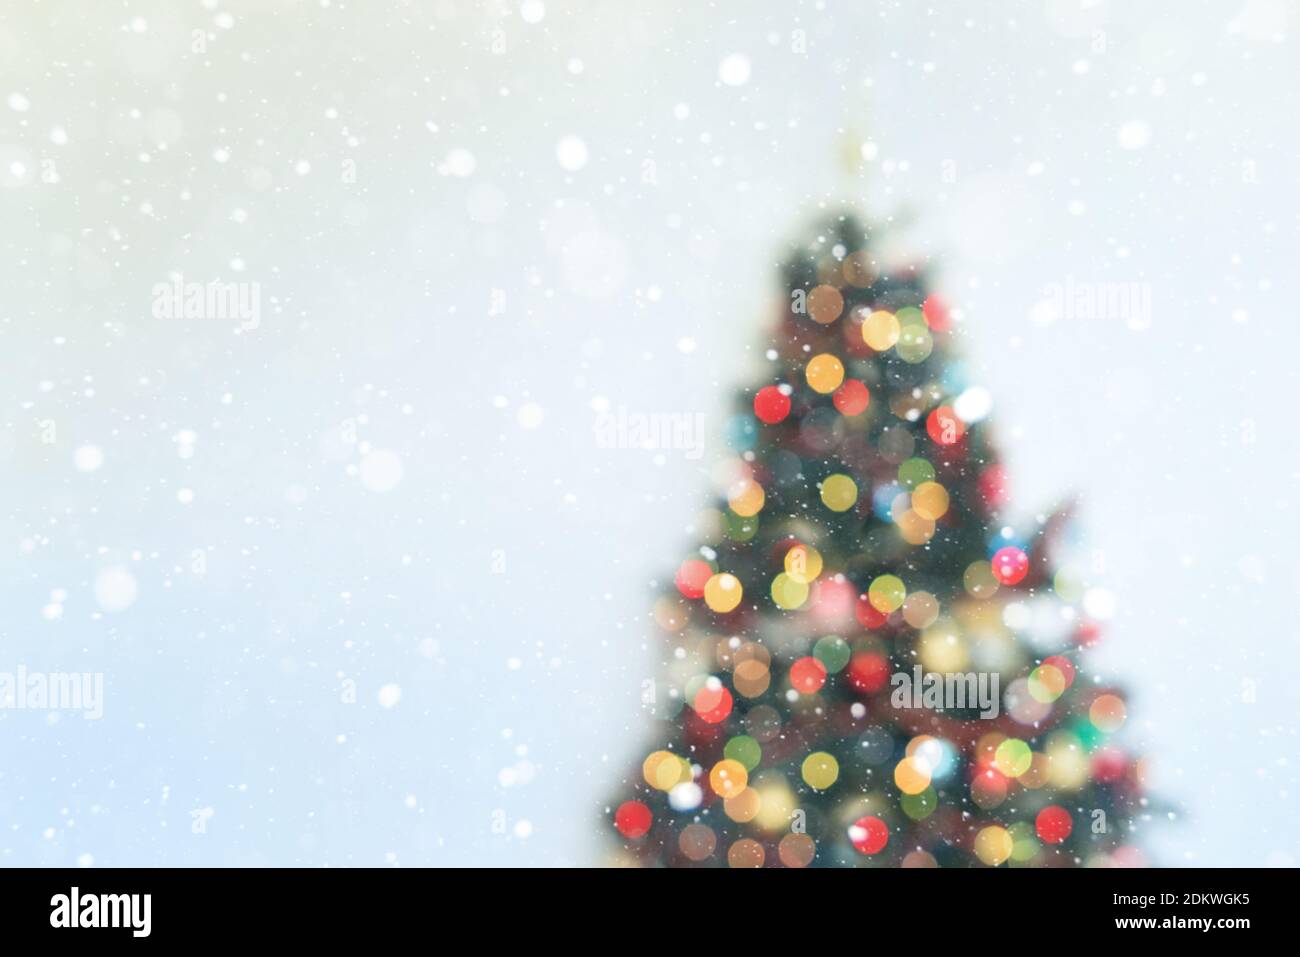 Defocused Christmas tree with lights Stock Photo